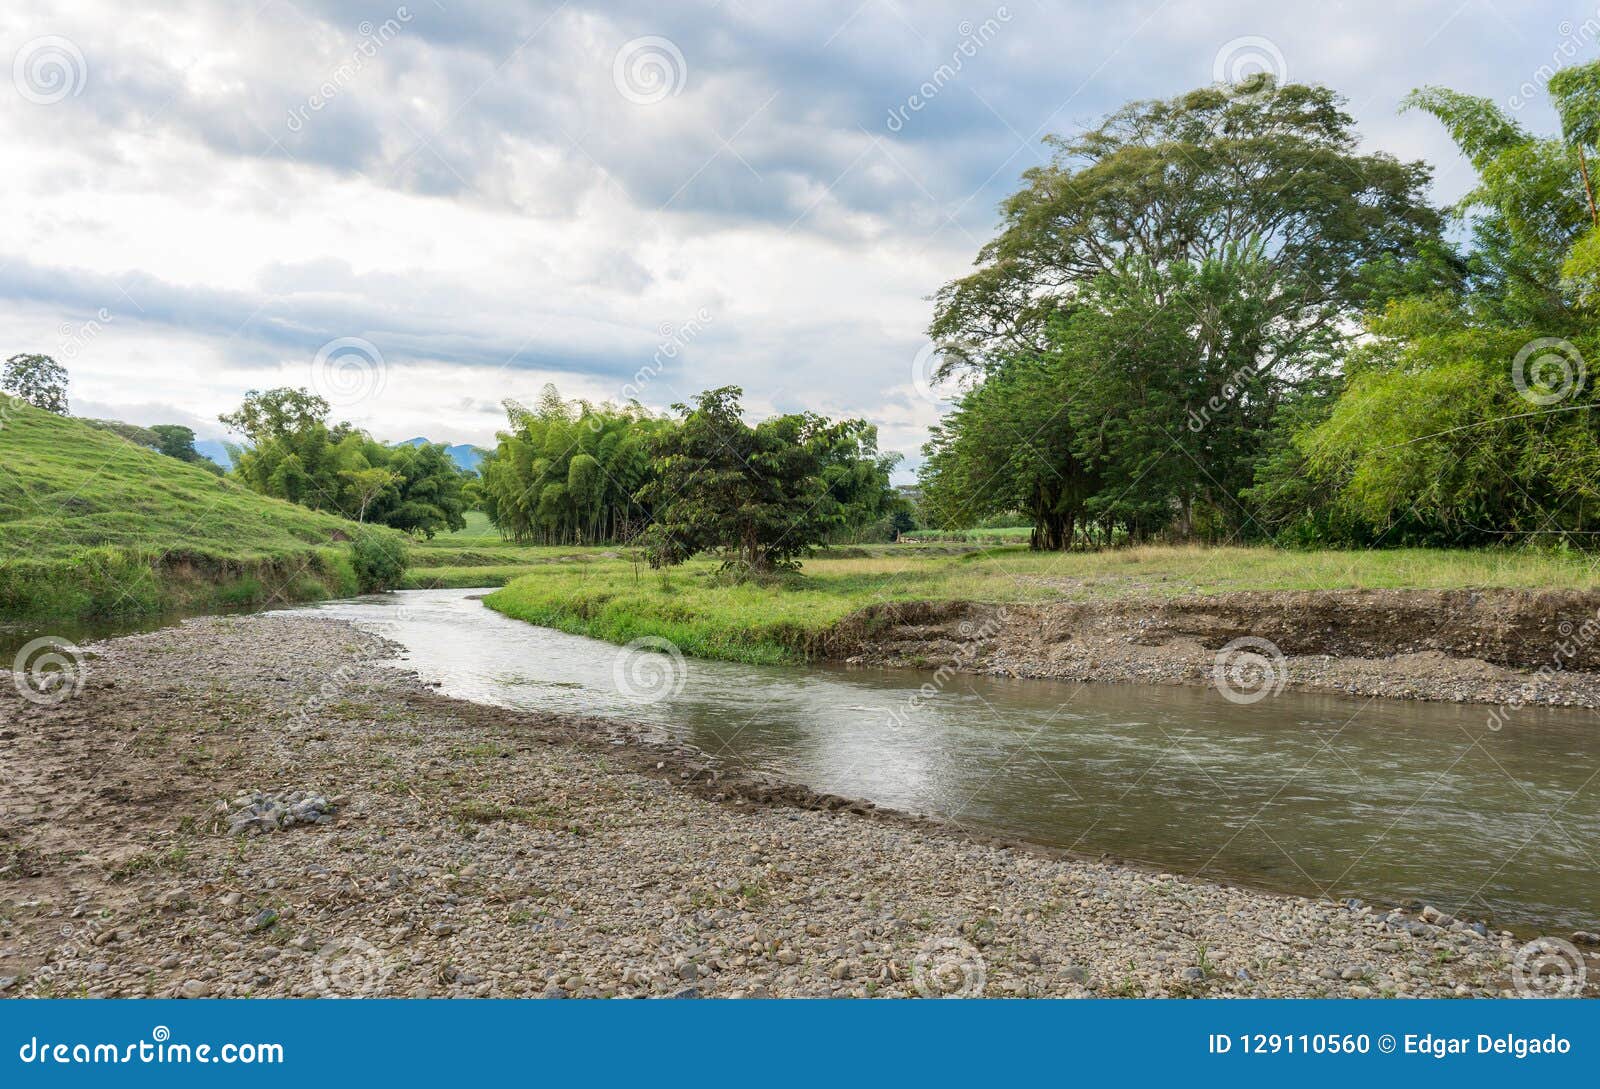 small river and landscape